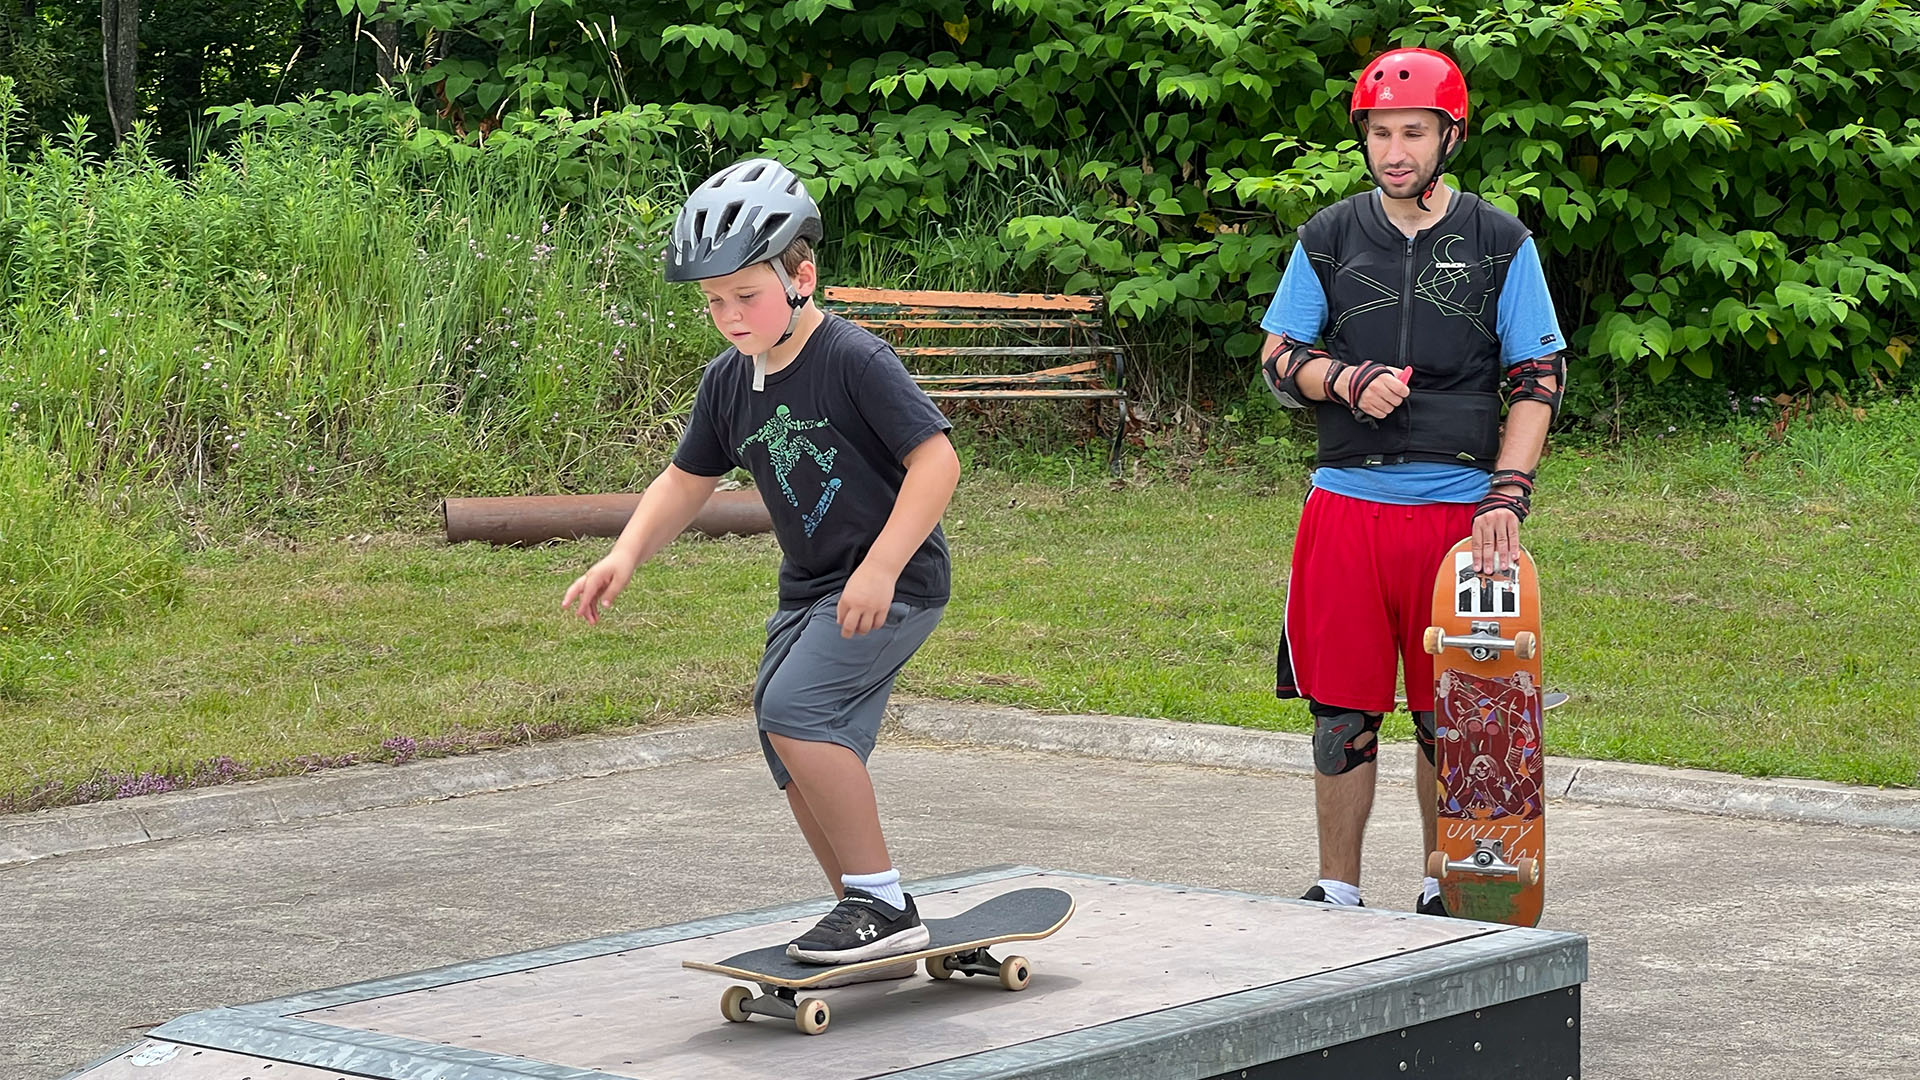 ASF Skateboard Thomas Stratton pushes down a ramp while fellow skateboarder Zach Elder watches